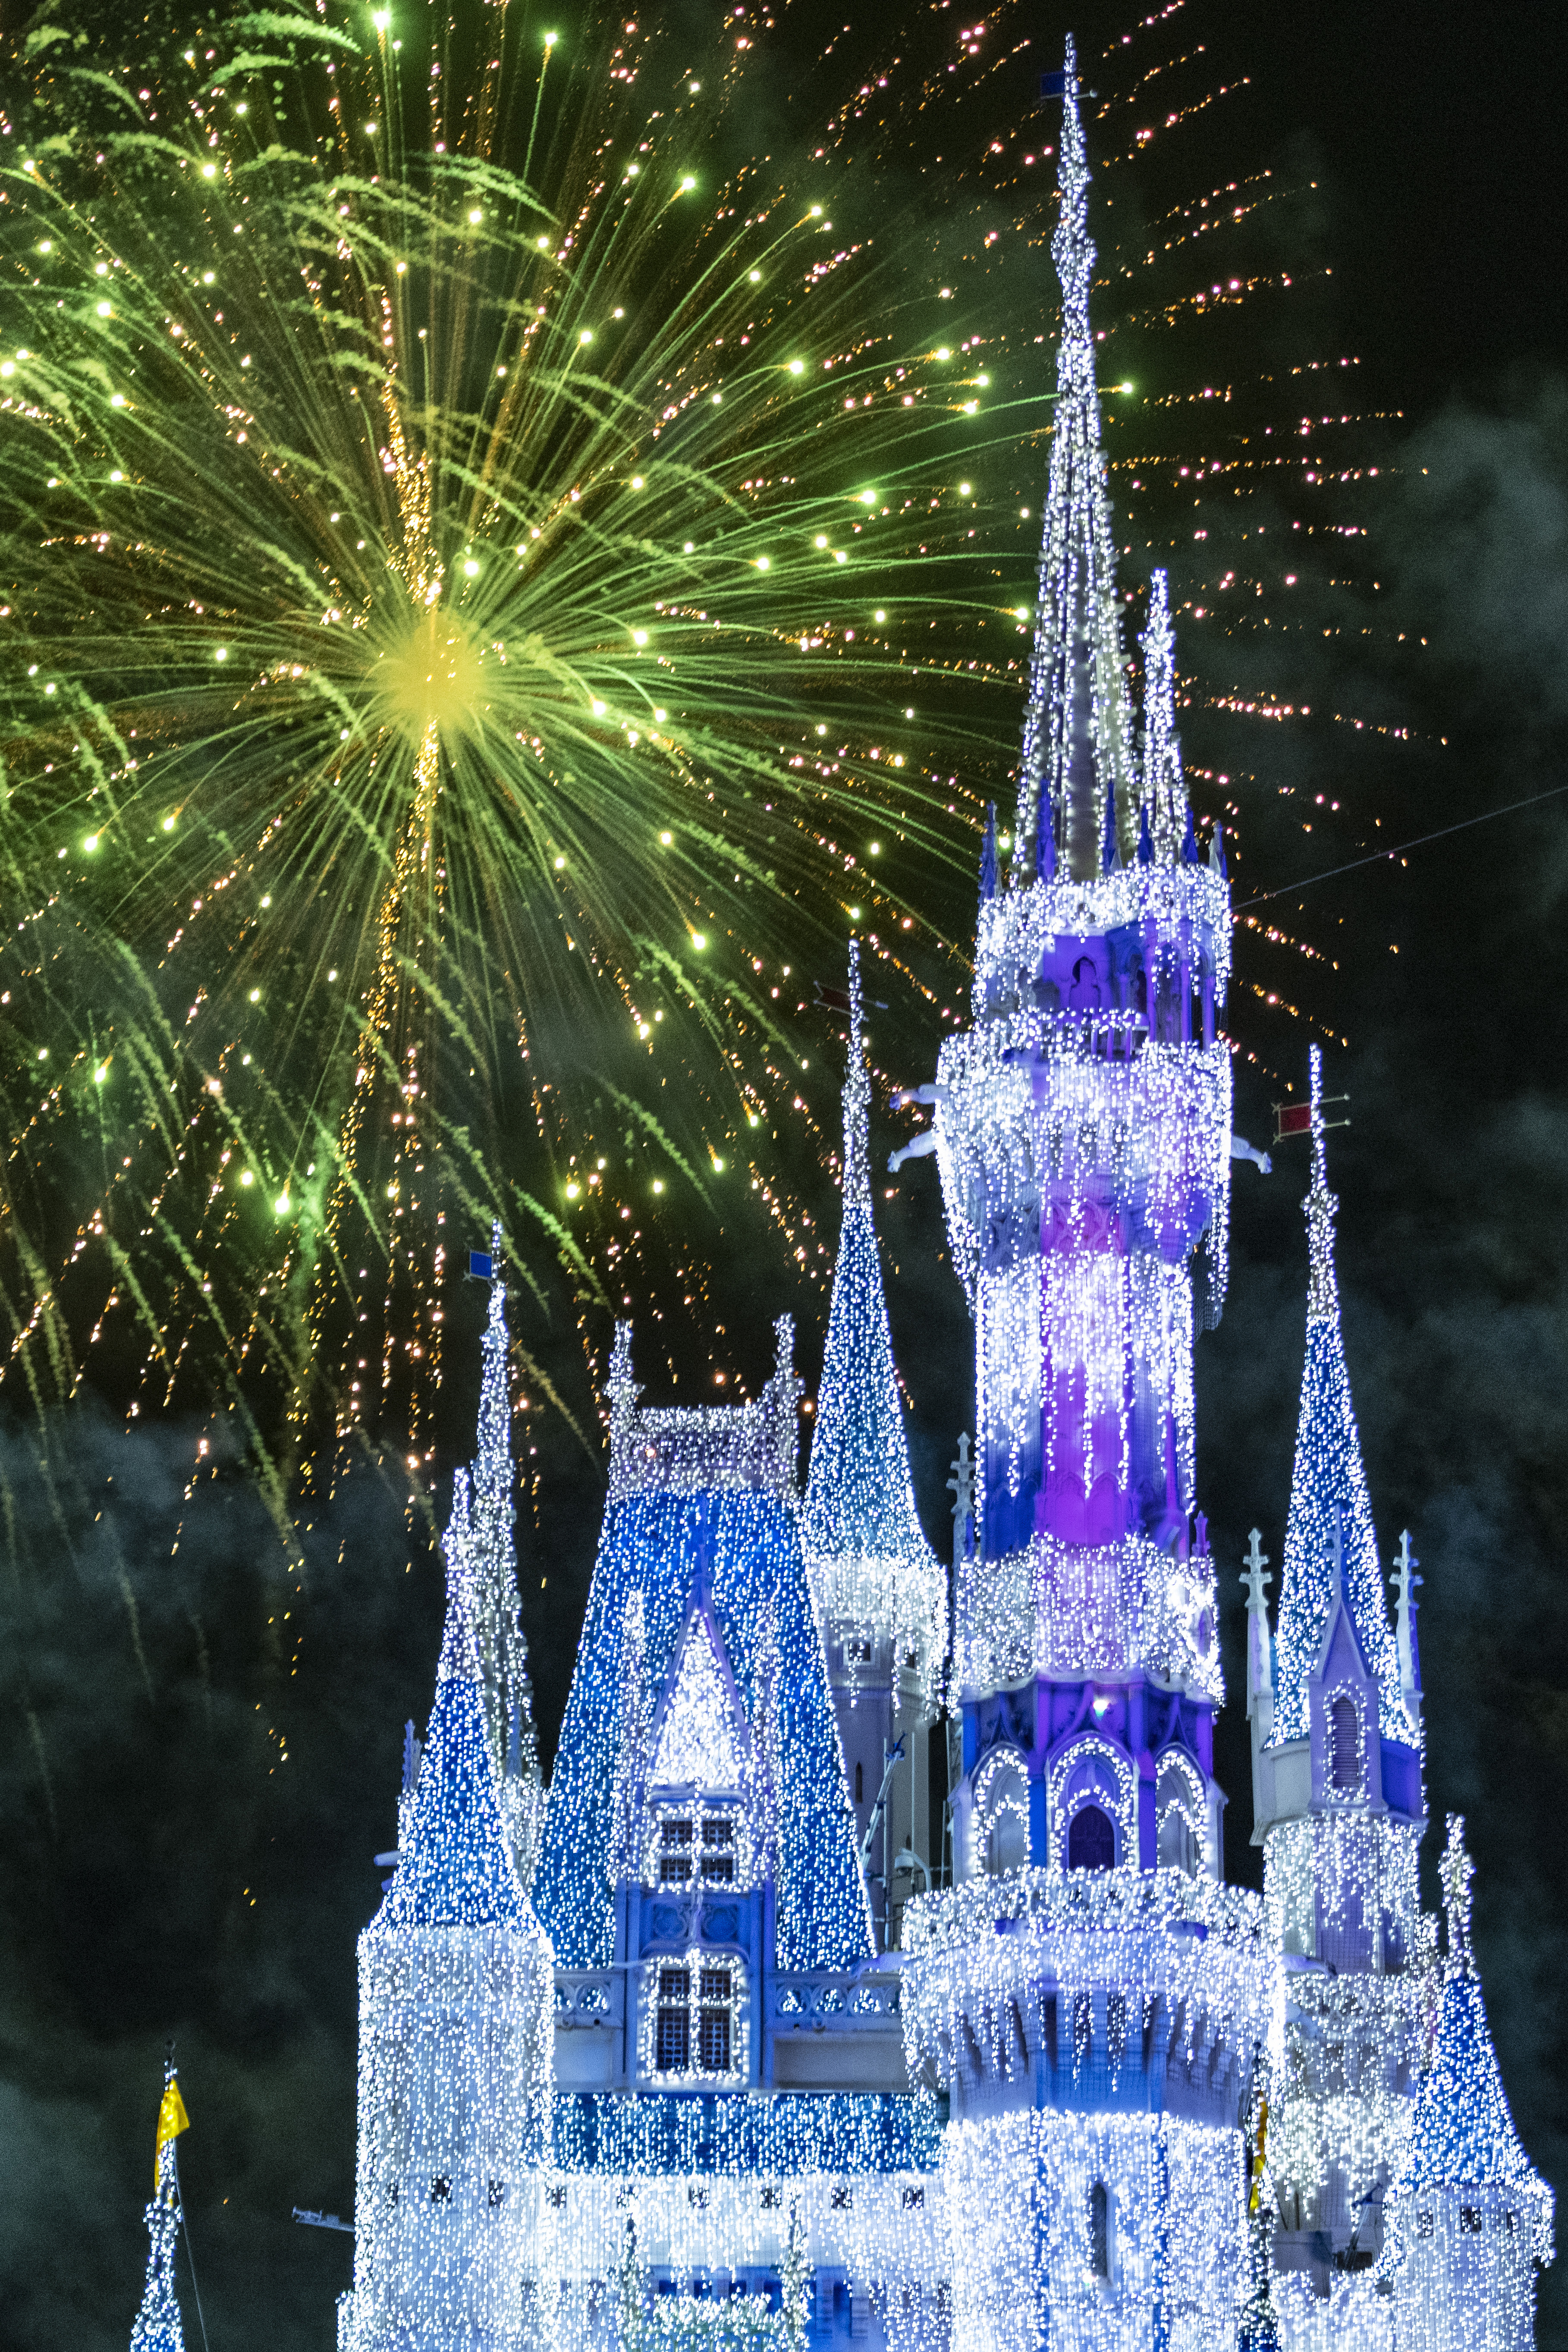 Disney holiday fireworks